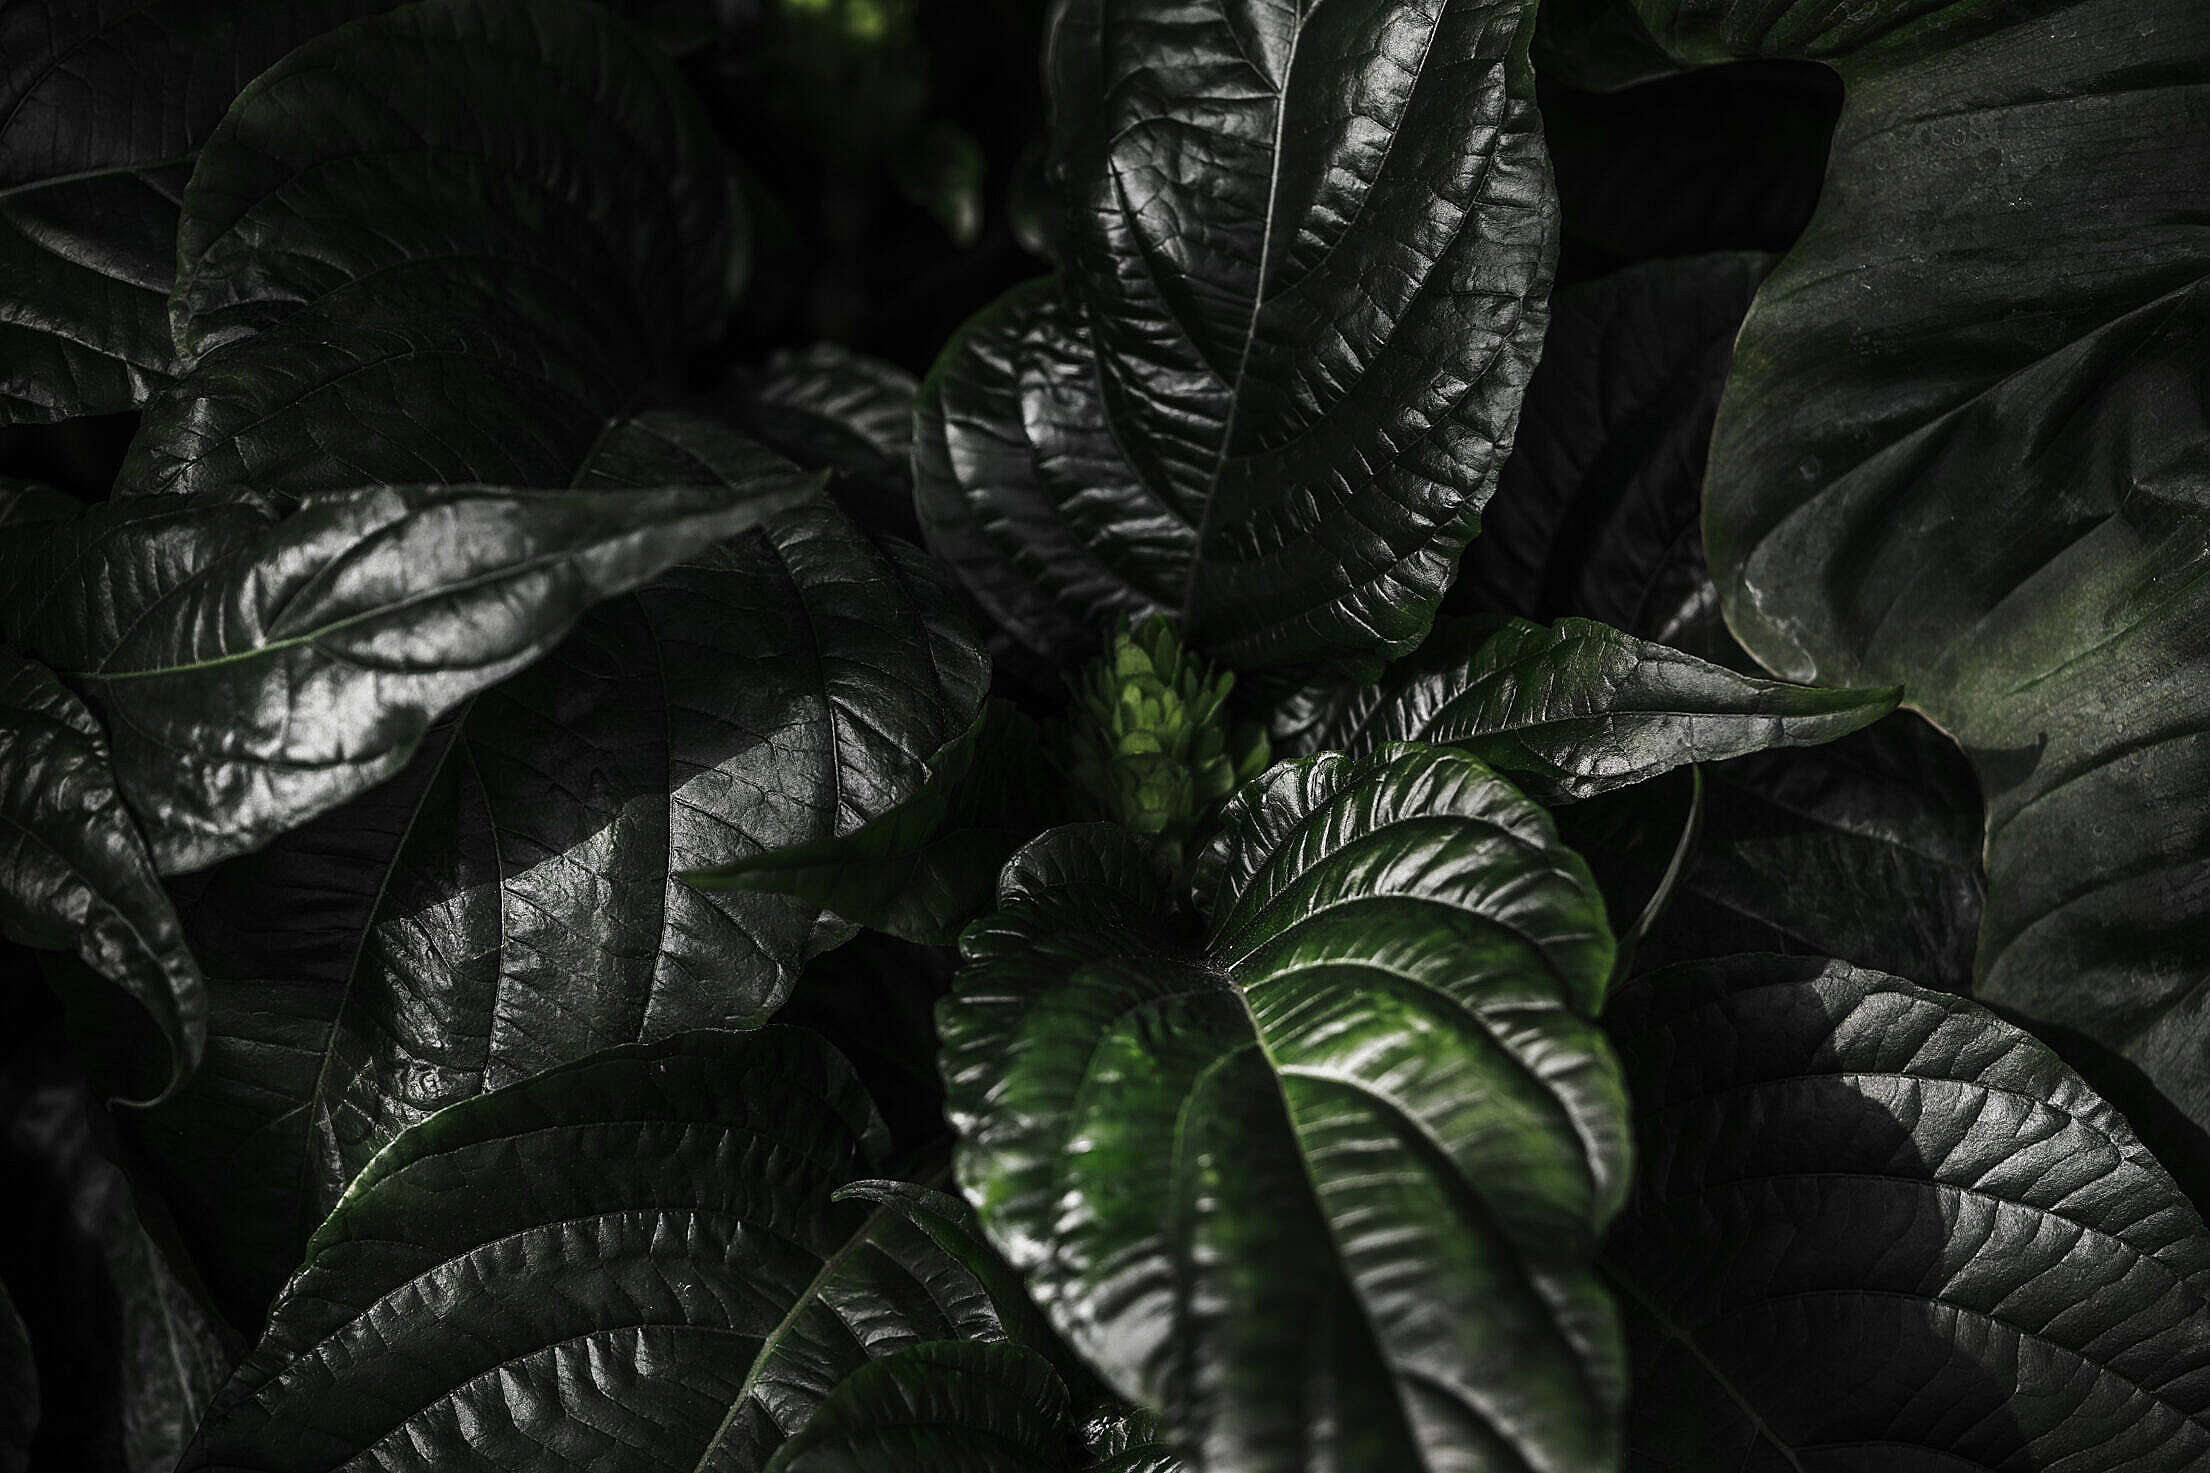 Dark Plant Leaves Background Free Stock Photo